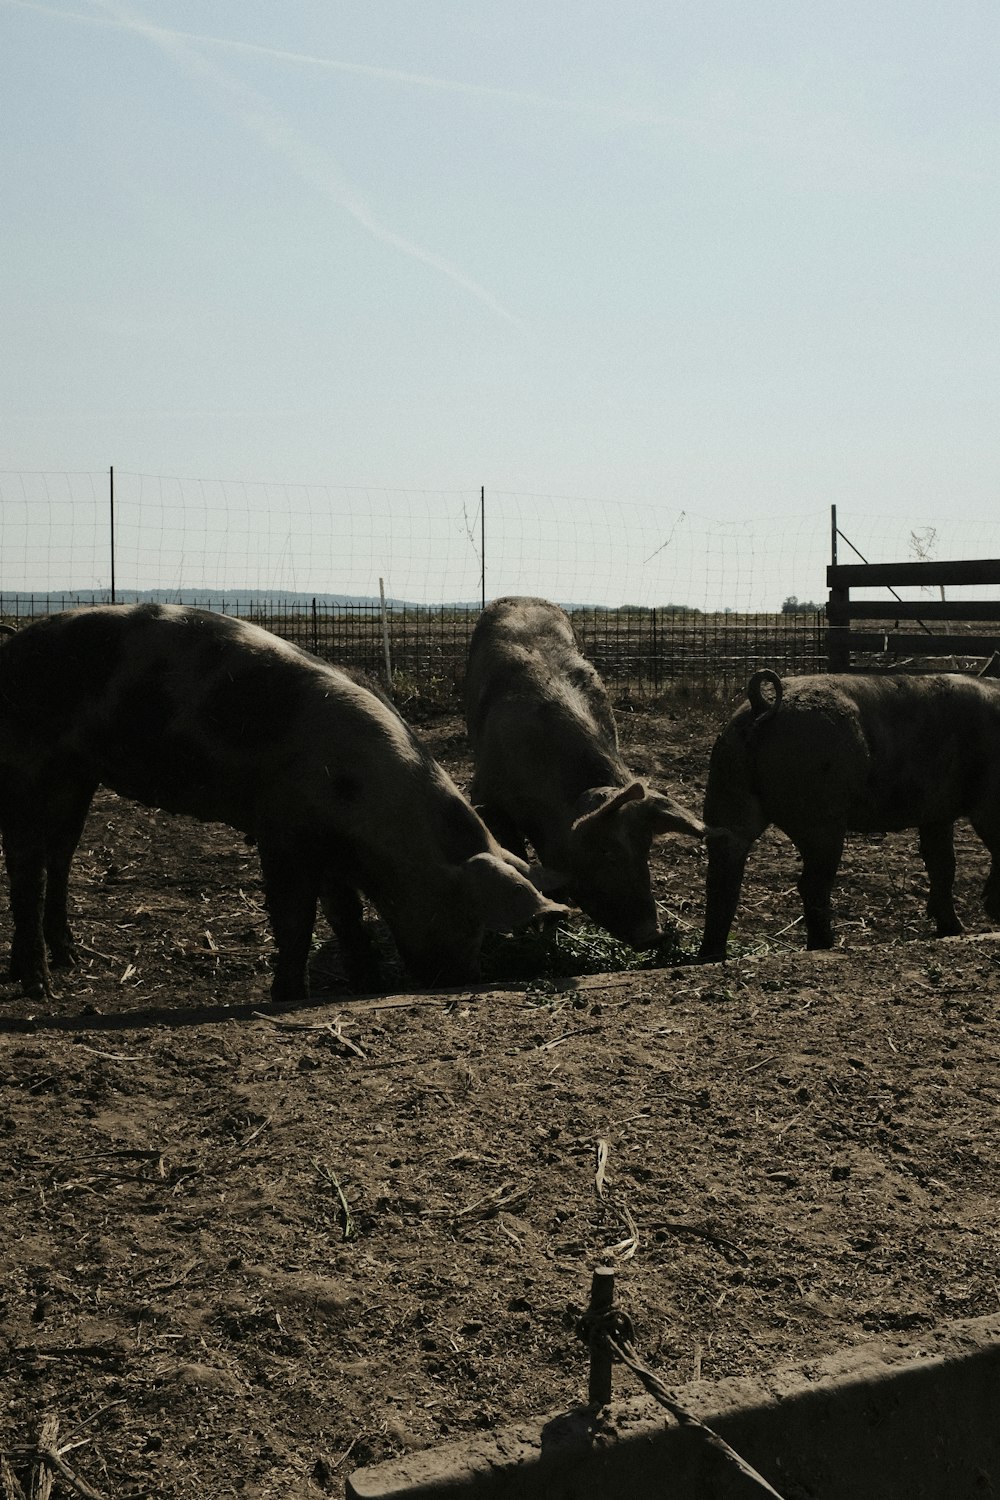 threebrown cattles